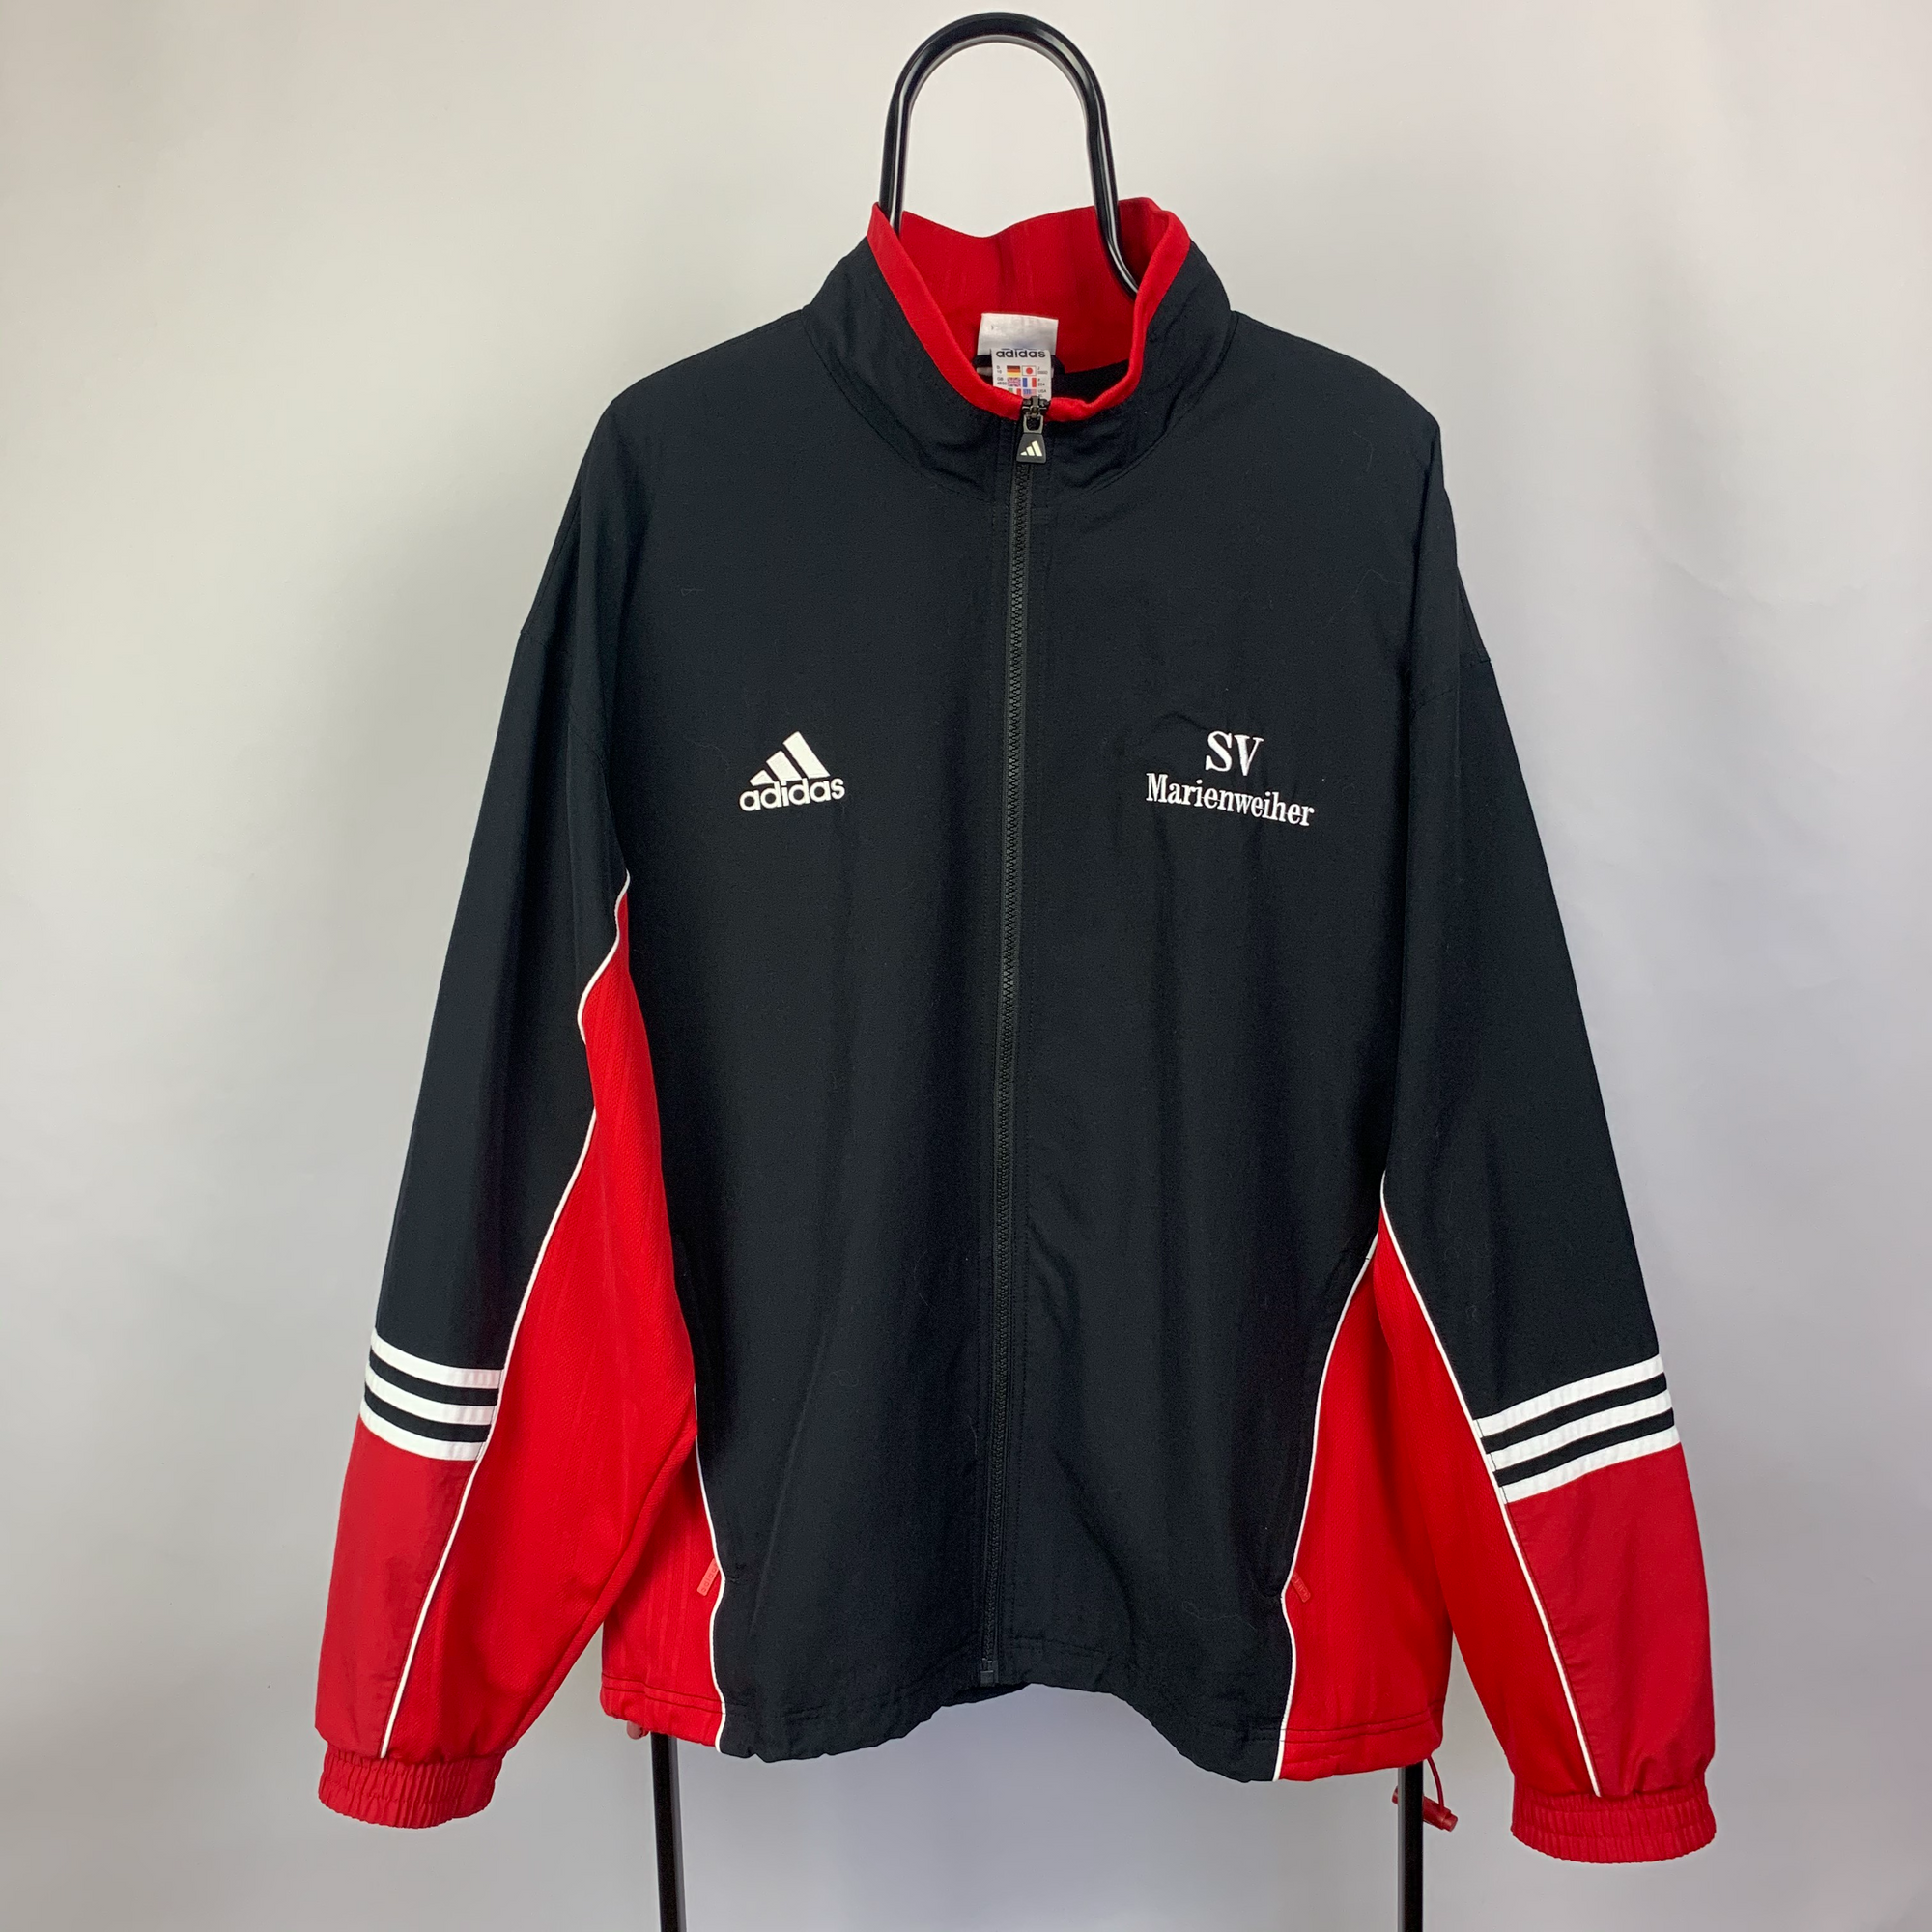 Vintage Adidas Marienweiher Track Jacket - Men's Large/Women's XL